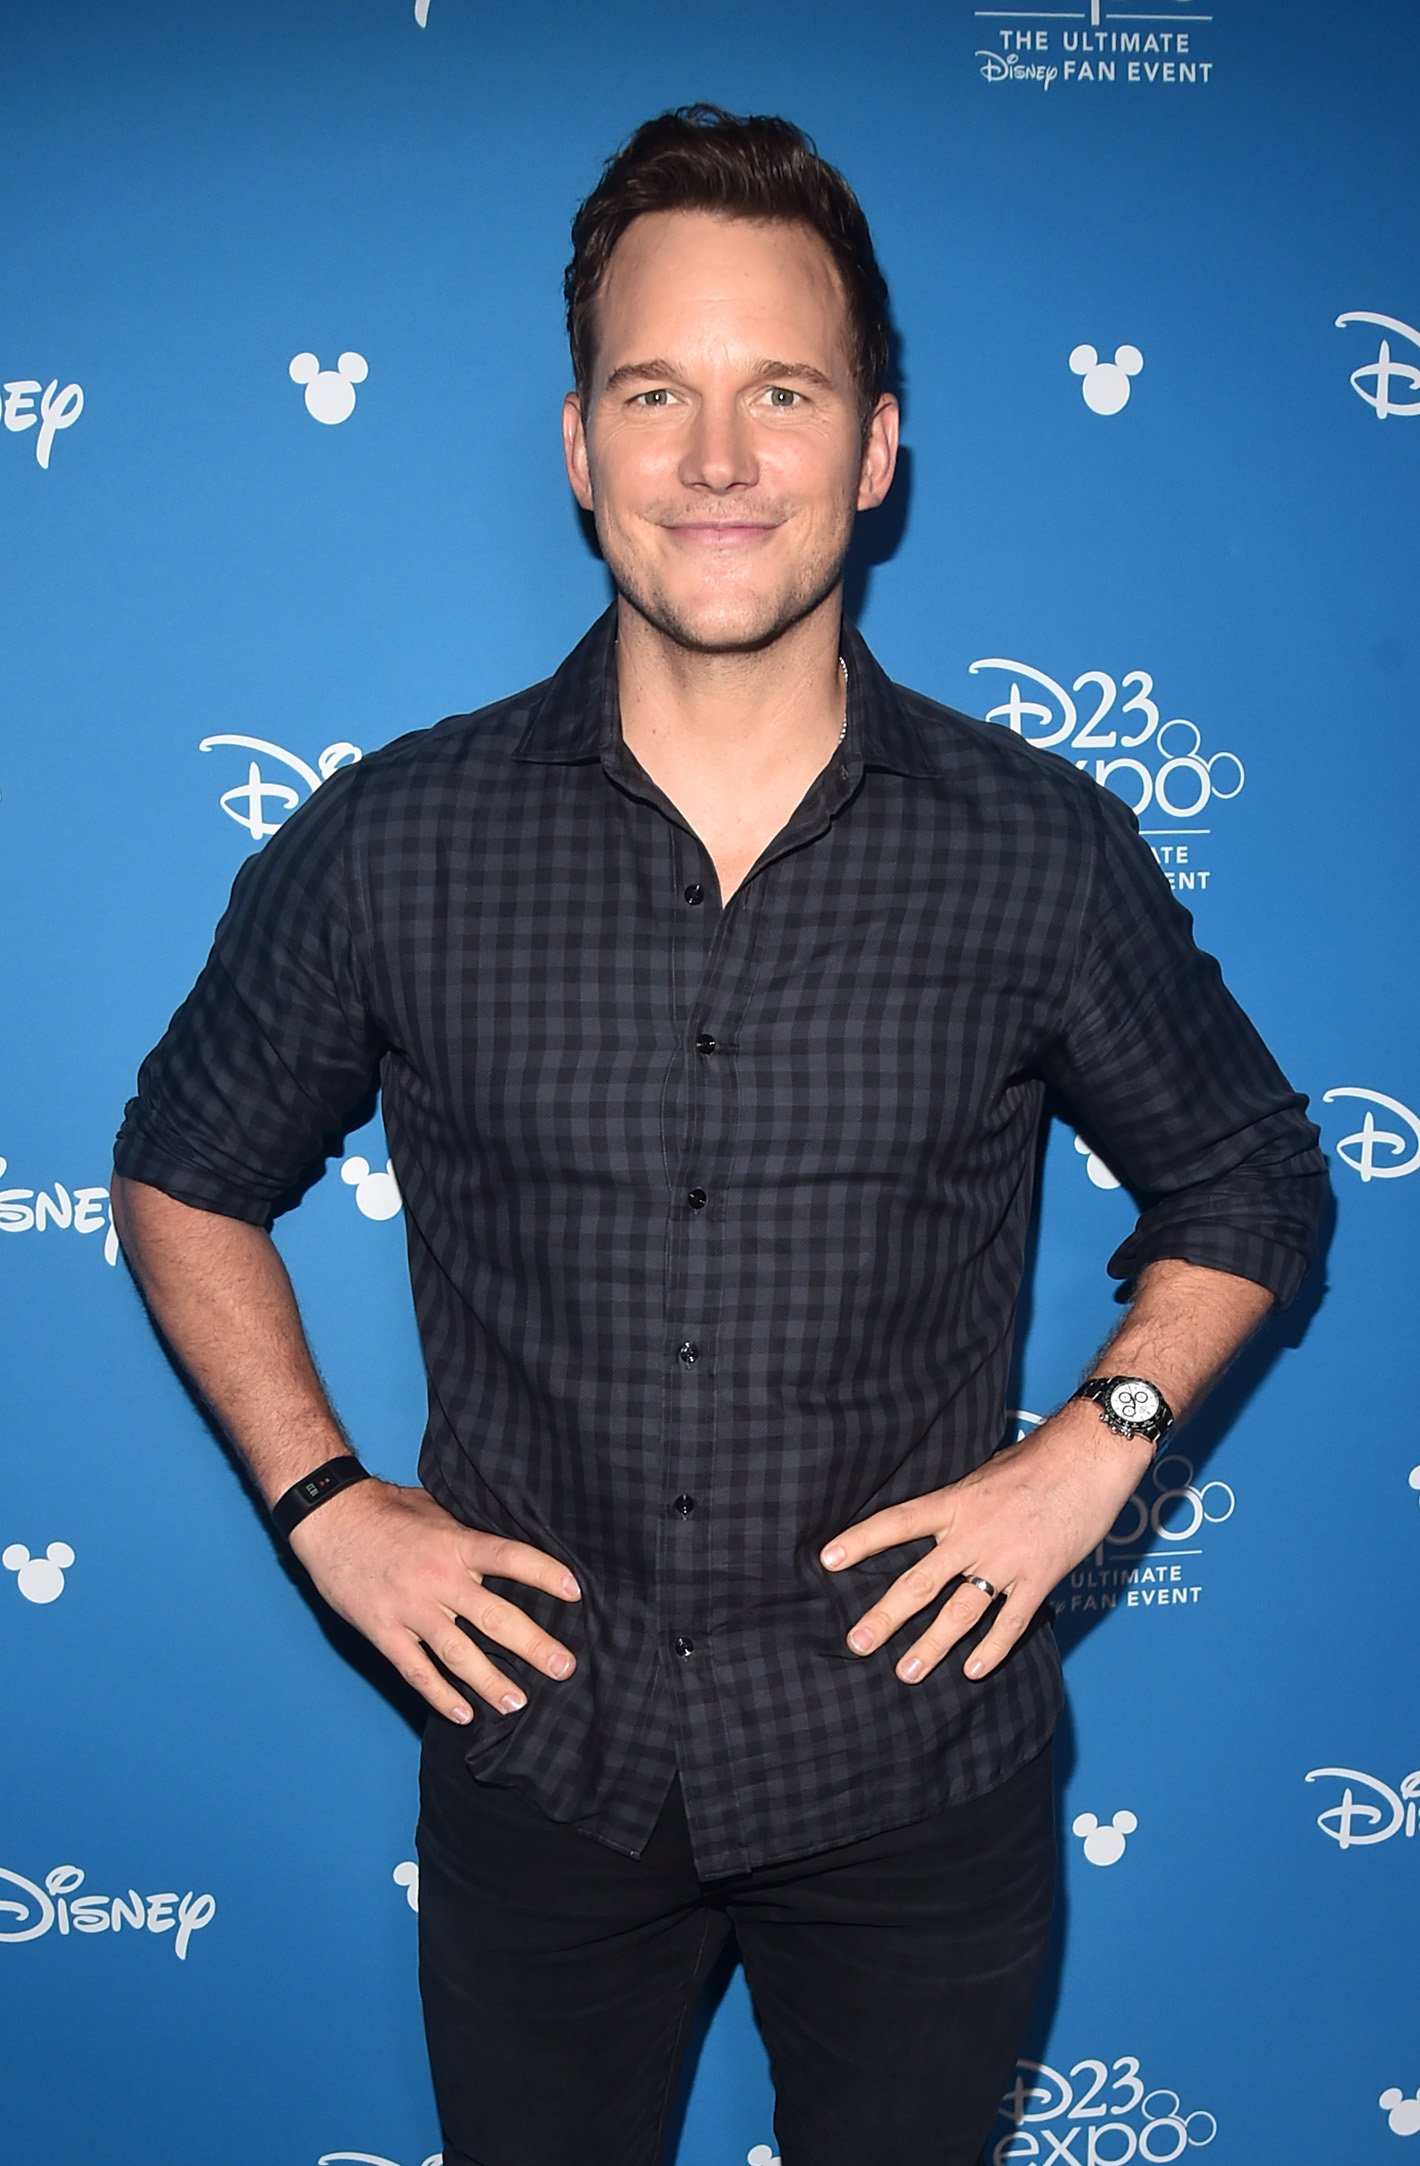 Chris Pratt attends the Walt Disney Studios presentation at Disney’s D23 EXPO 2019 in Anaheim, California on August 24, 2019. | Source: Getty Images